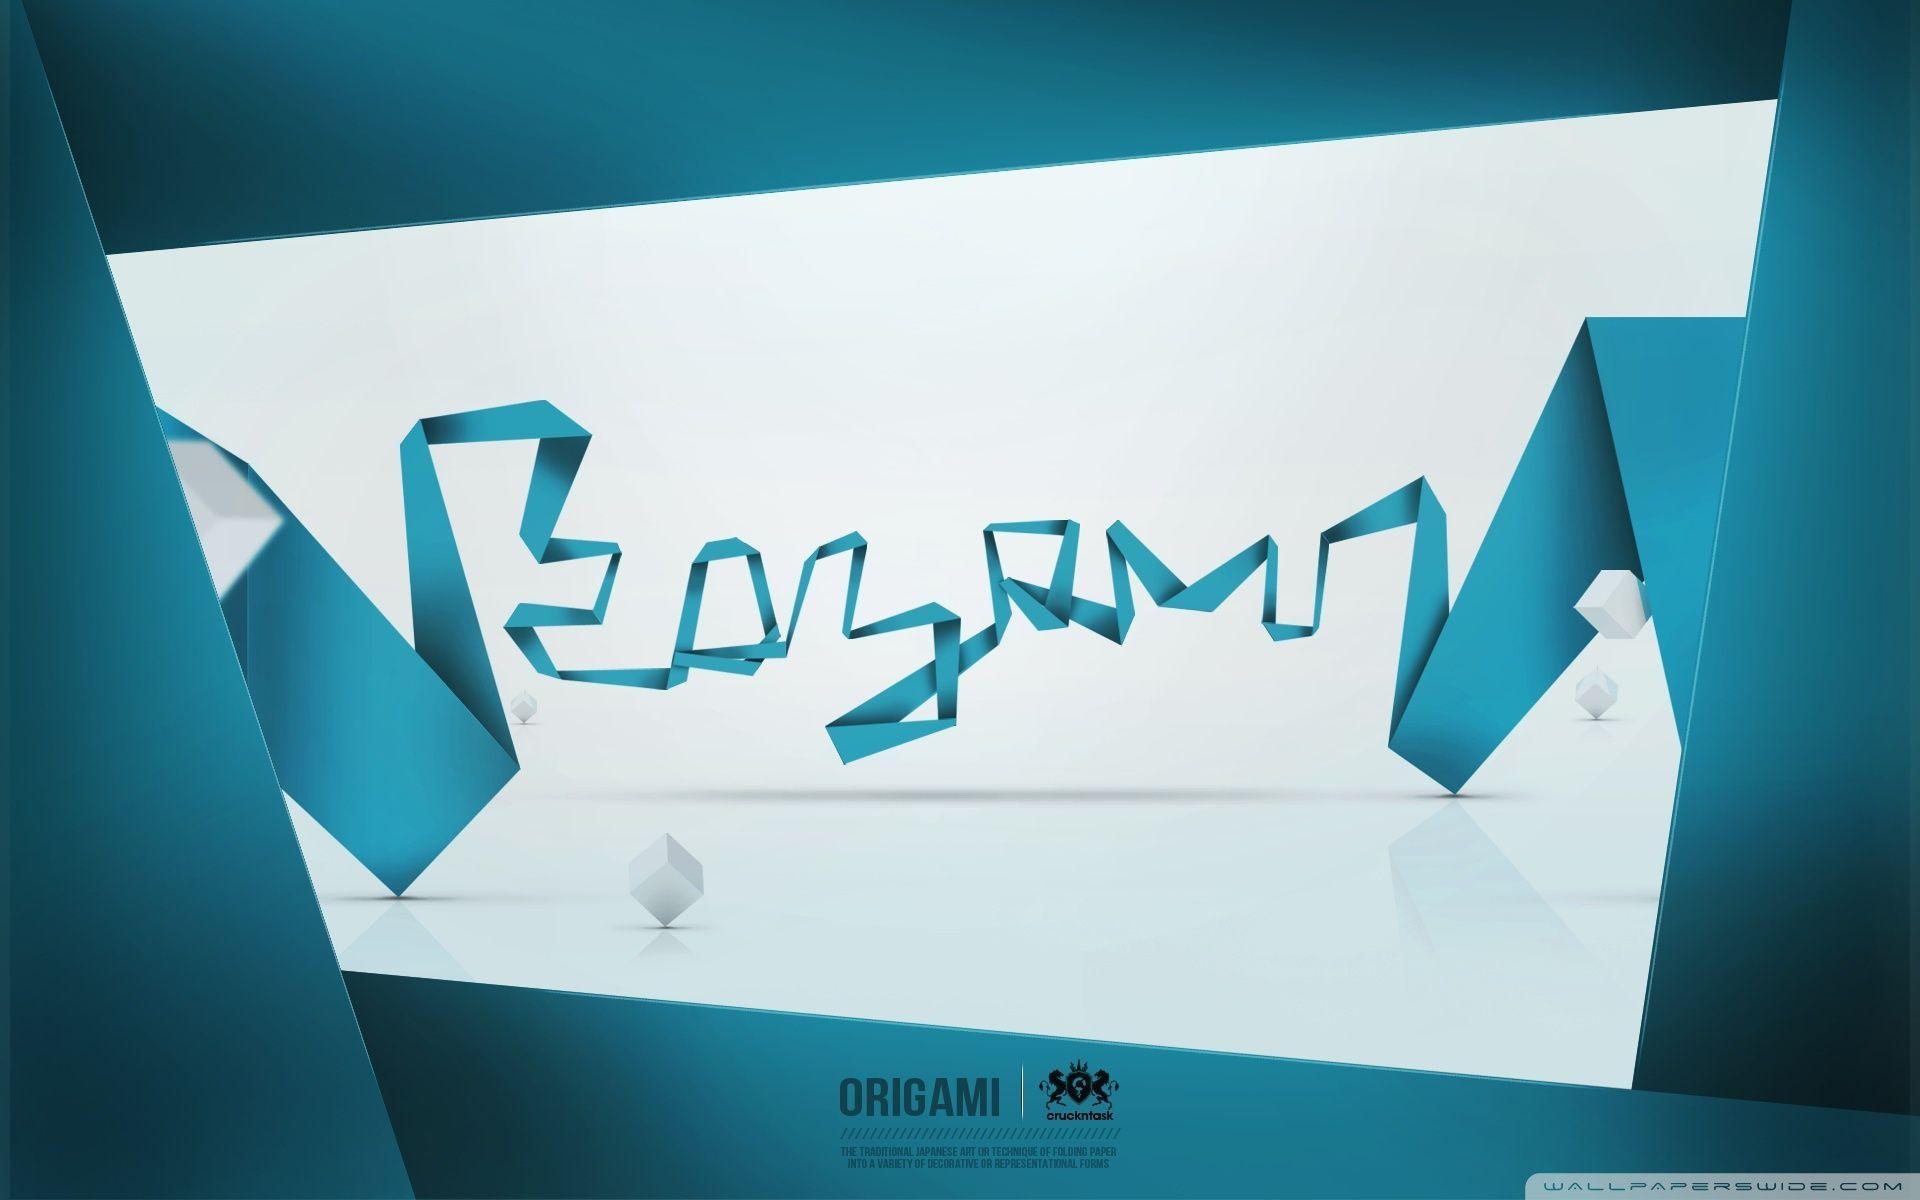 Origami HD desktop wallpaper, High Definition